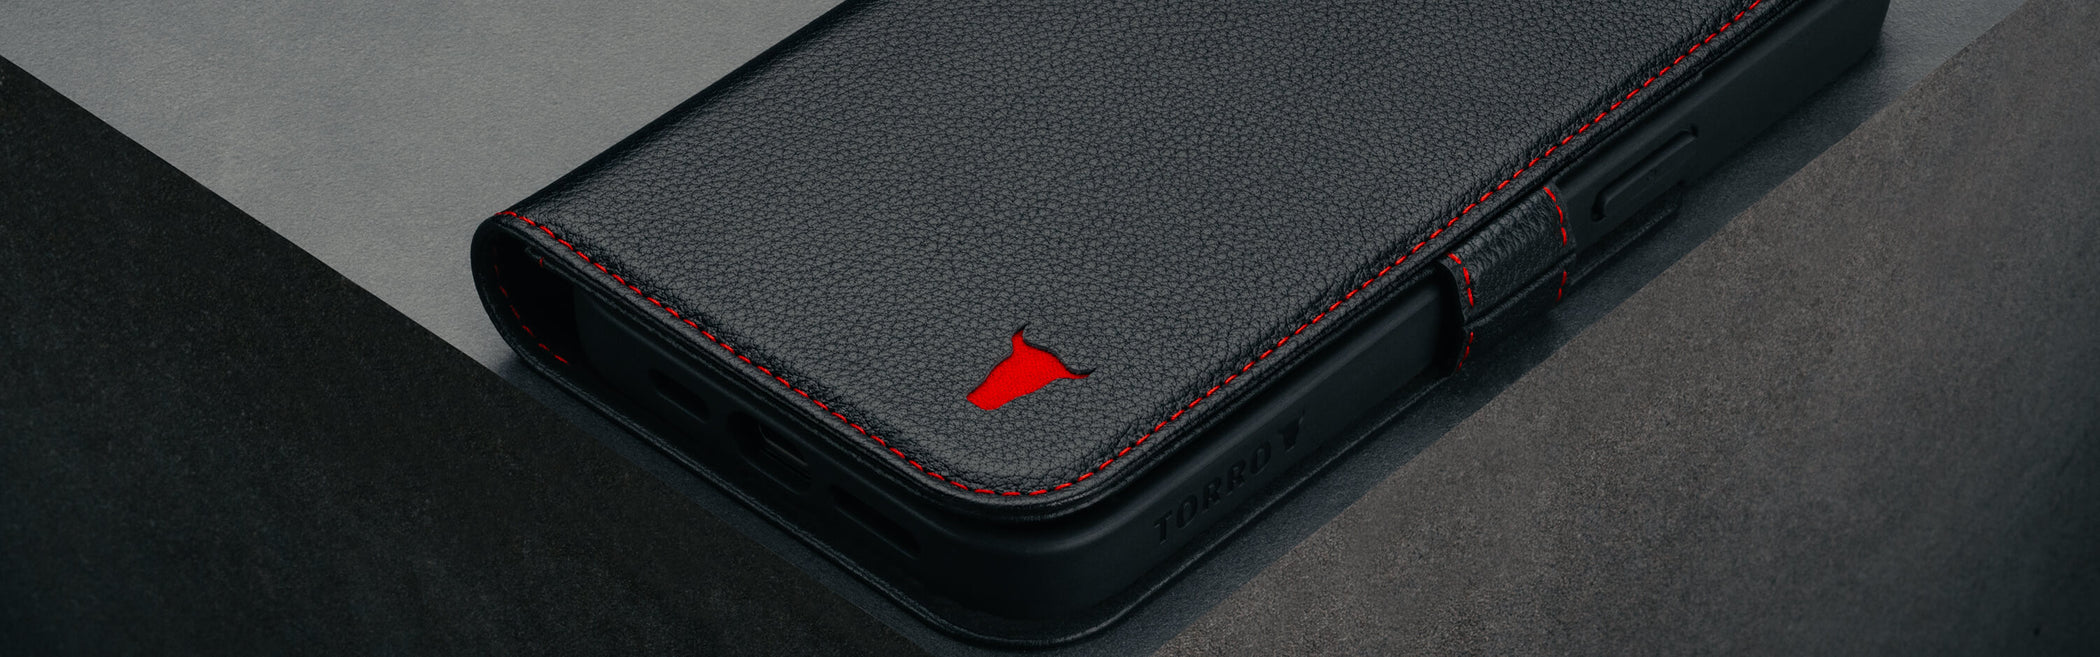 Google Pixel Leather Cases